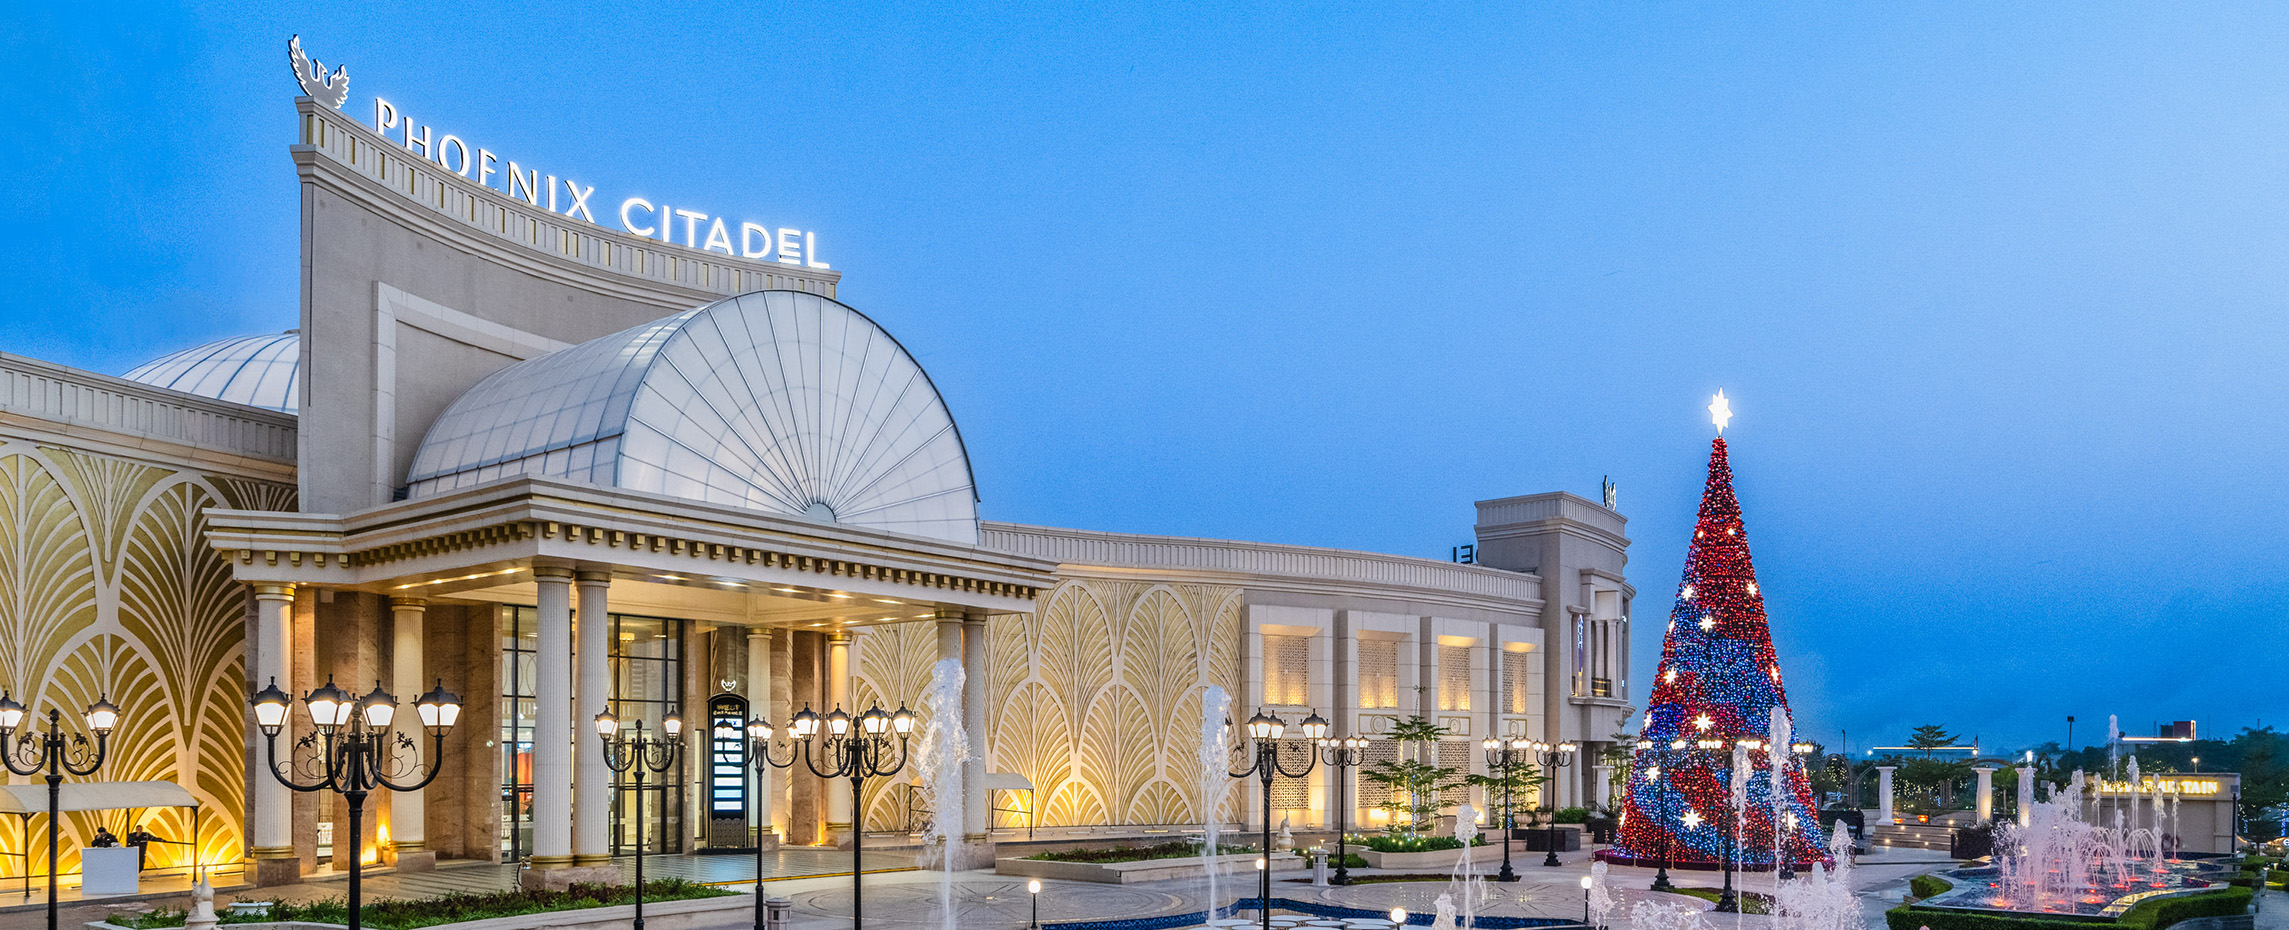 Best mall In Madhya Pradesh - Phoenix Citadel